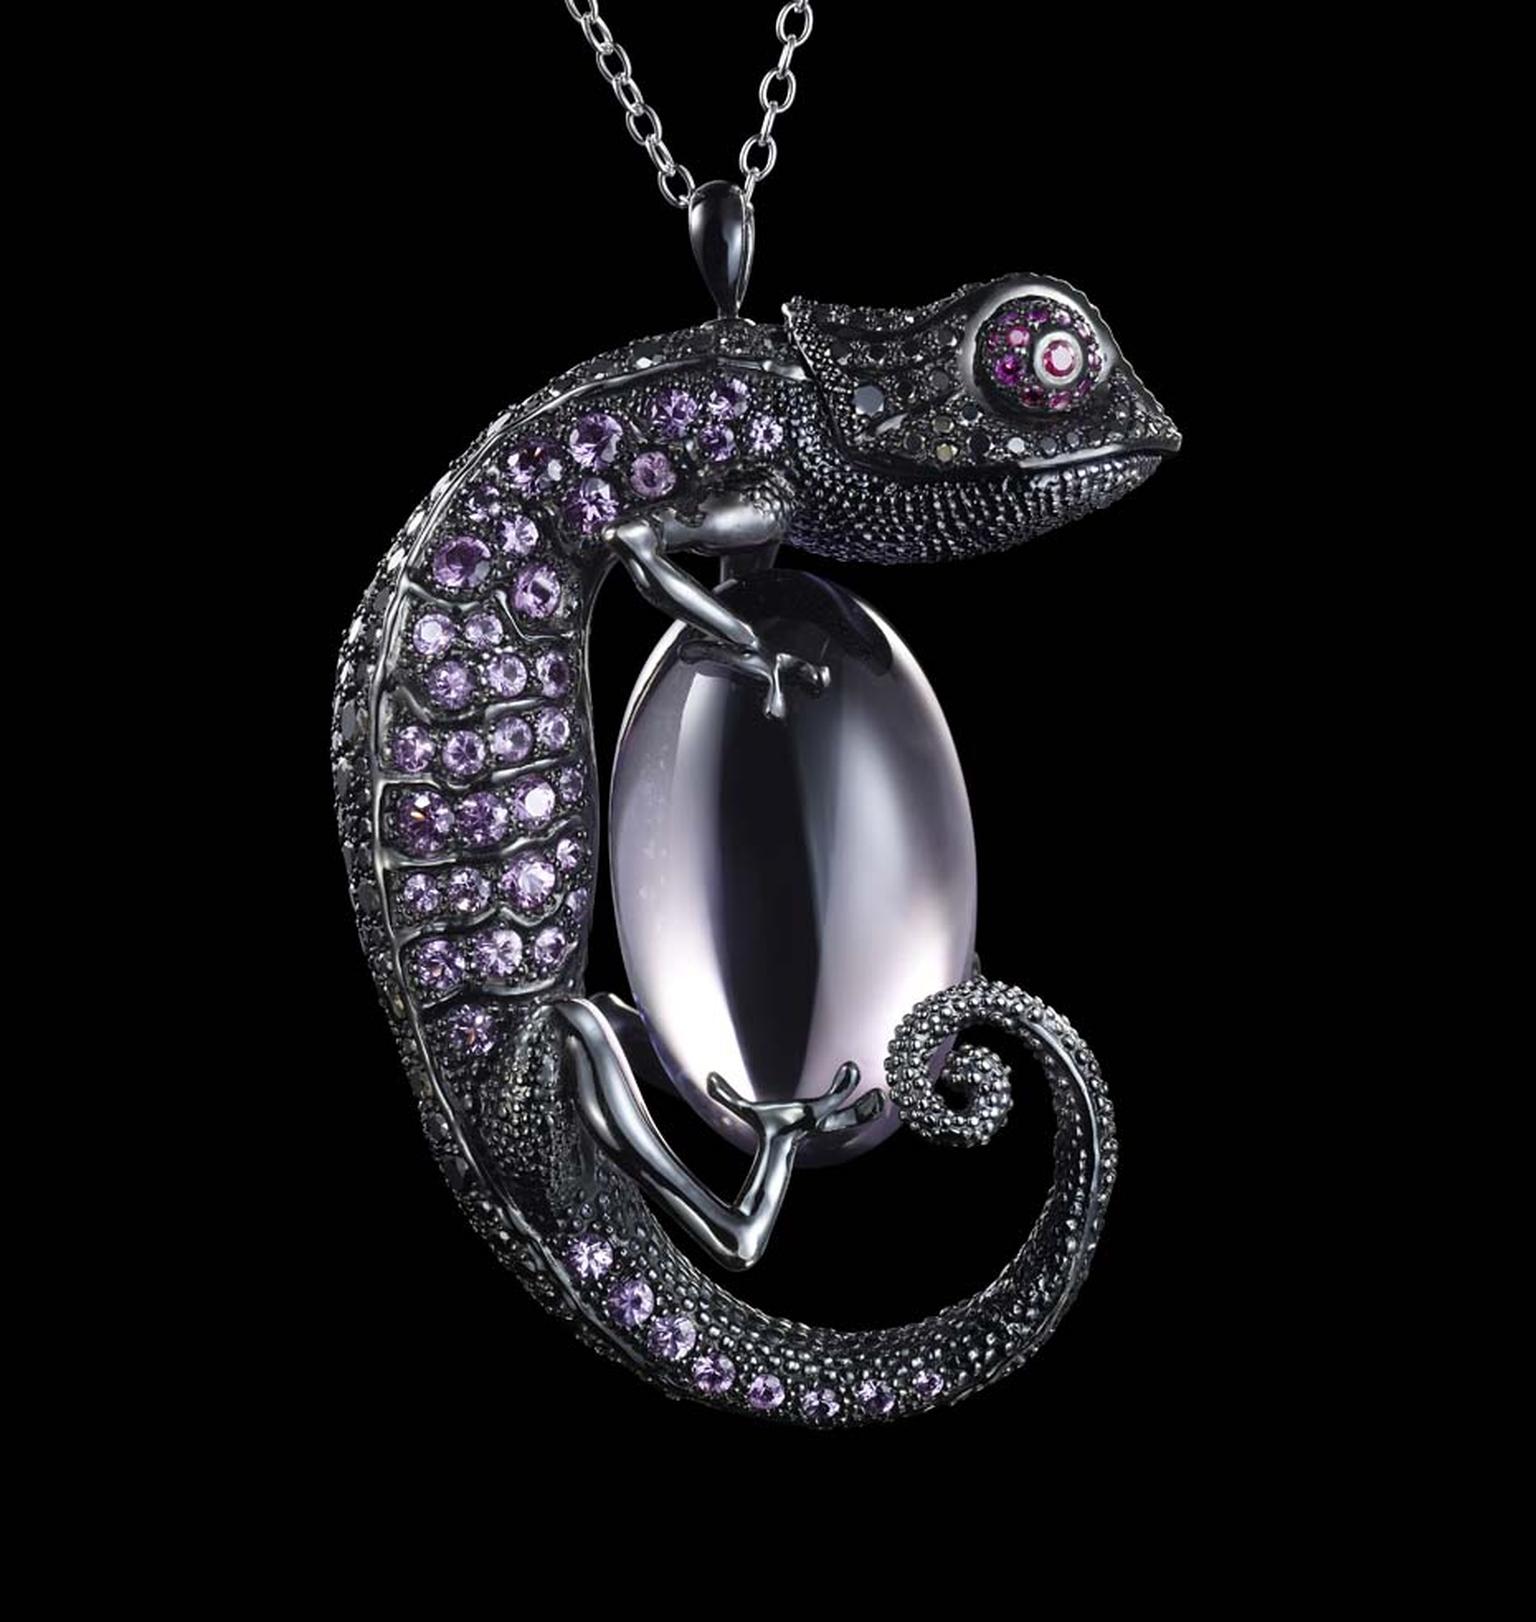 Dashi Namdakov Chameleon pendant in white gold and black rhodium with black diamonds, rubies, sapphires and amethysts.